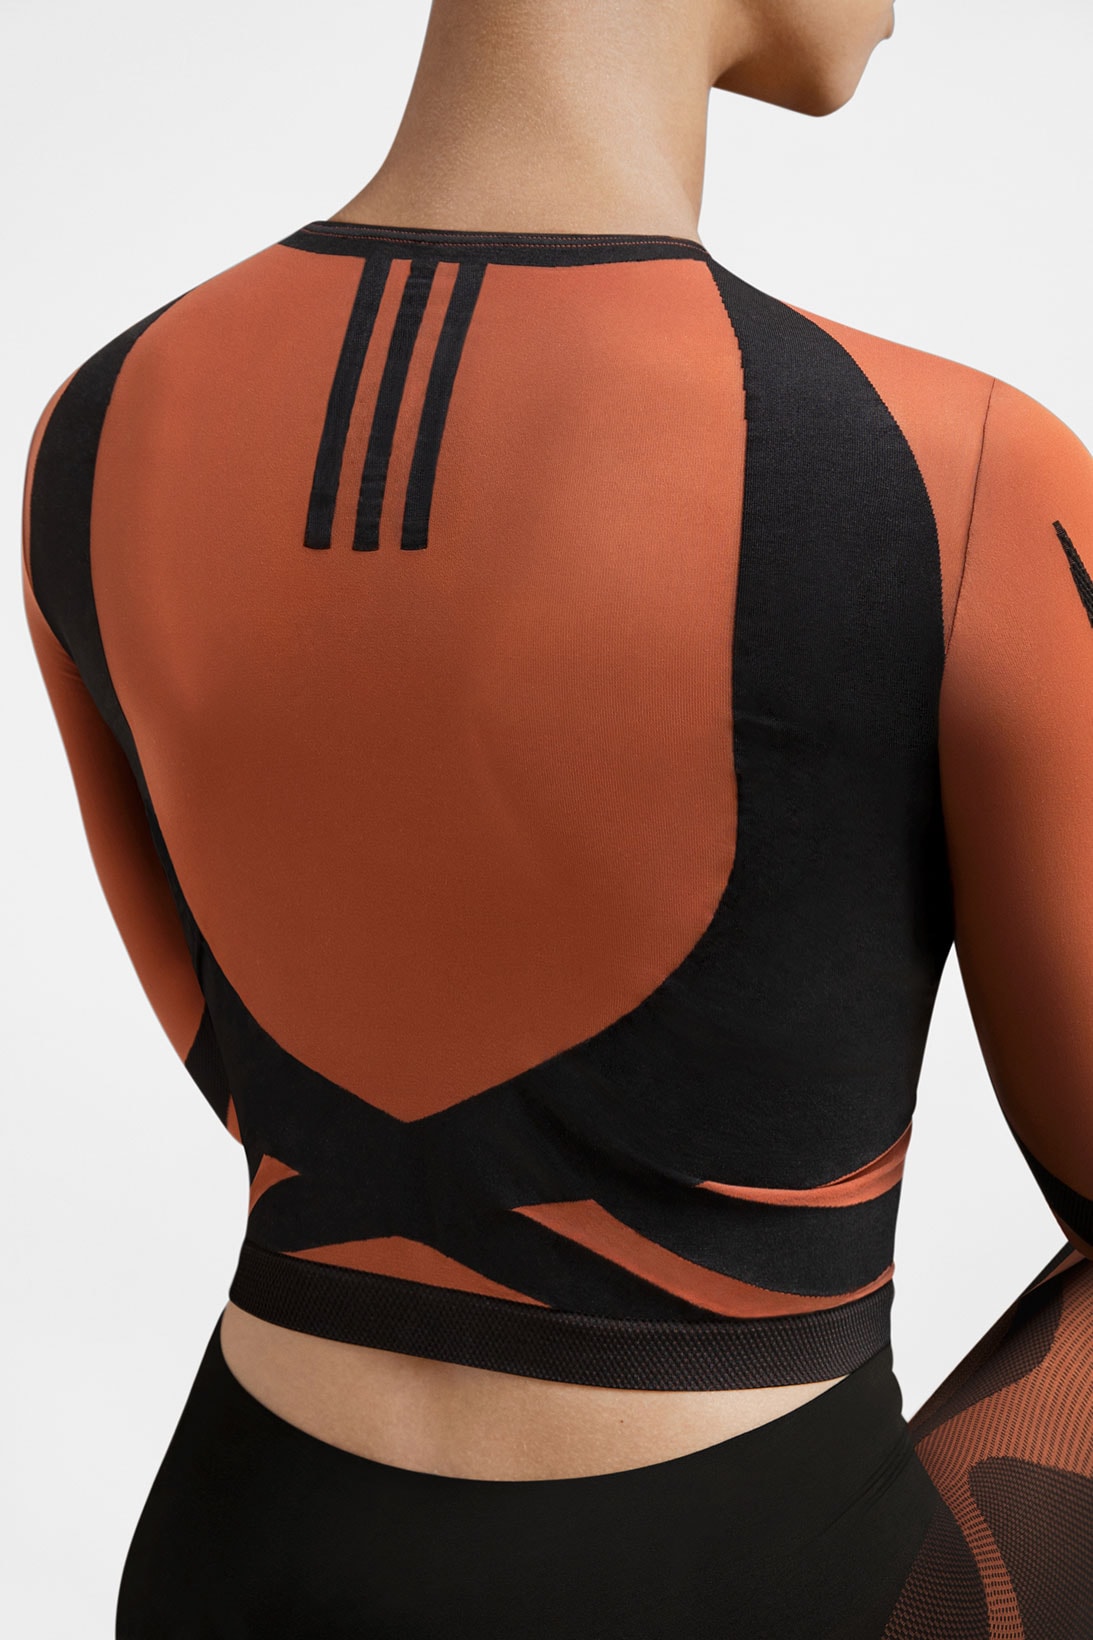 wolford adidas activewear performance collaboration seamless sheer motion crop top long sleeved orange black back details